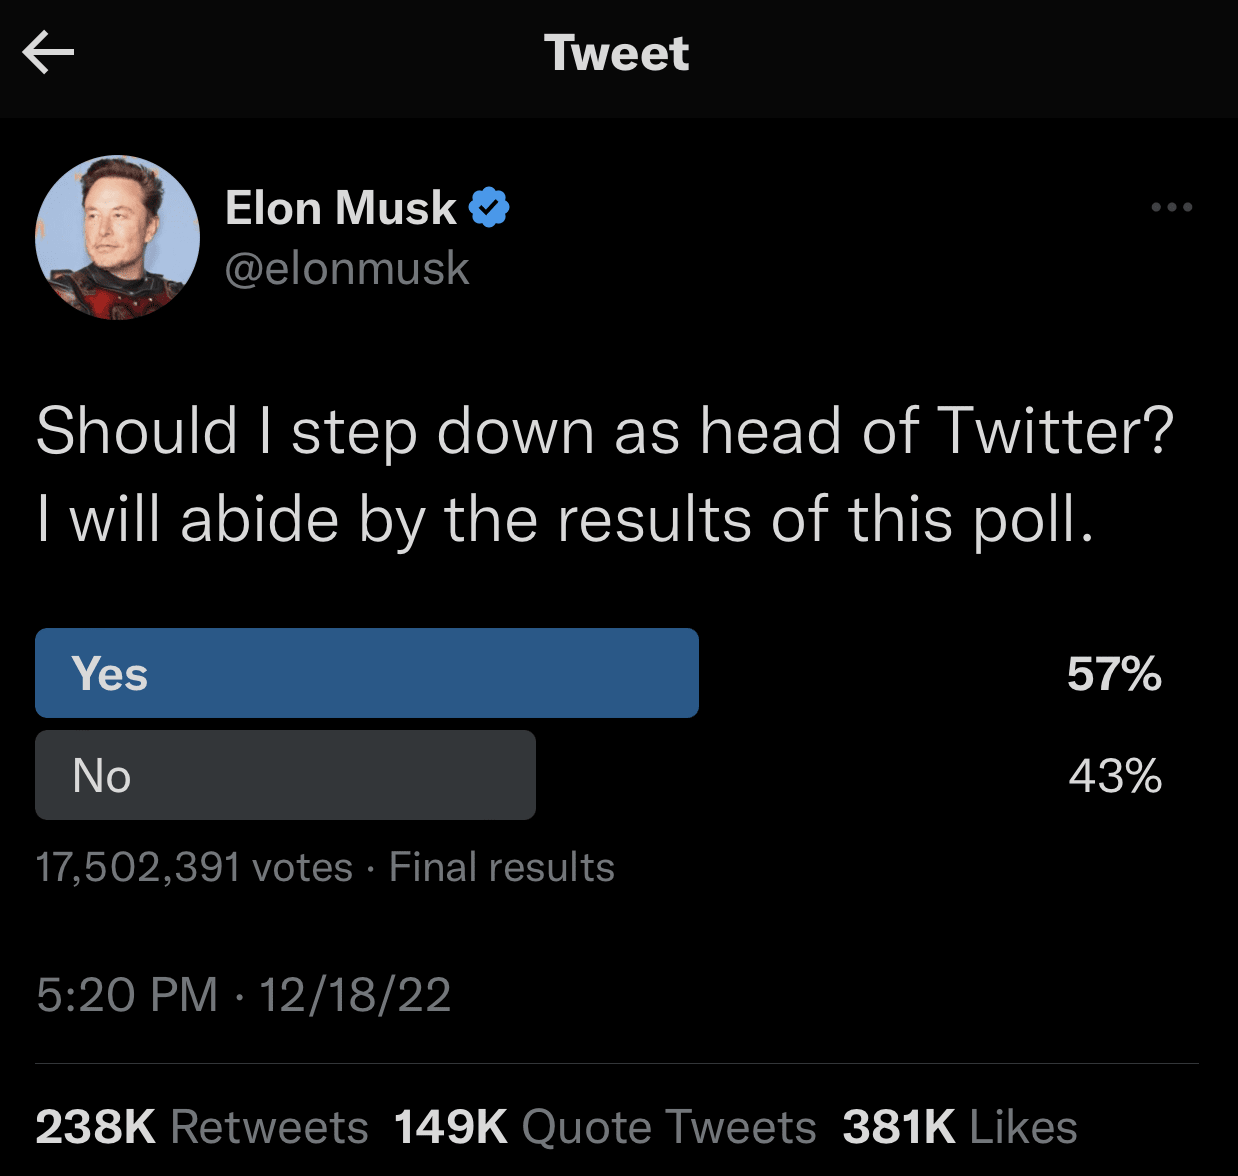 Elon Musk is seen posting on Twitter